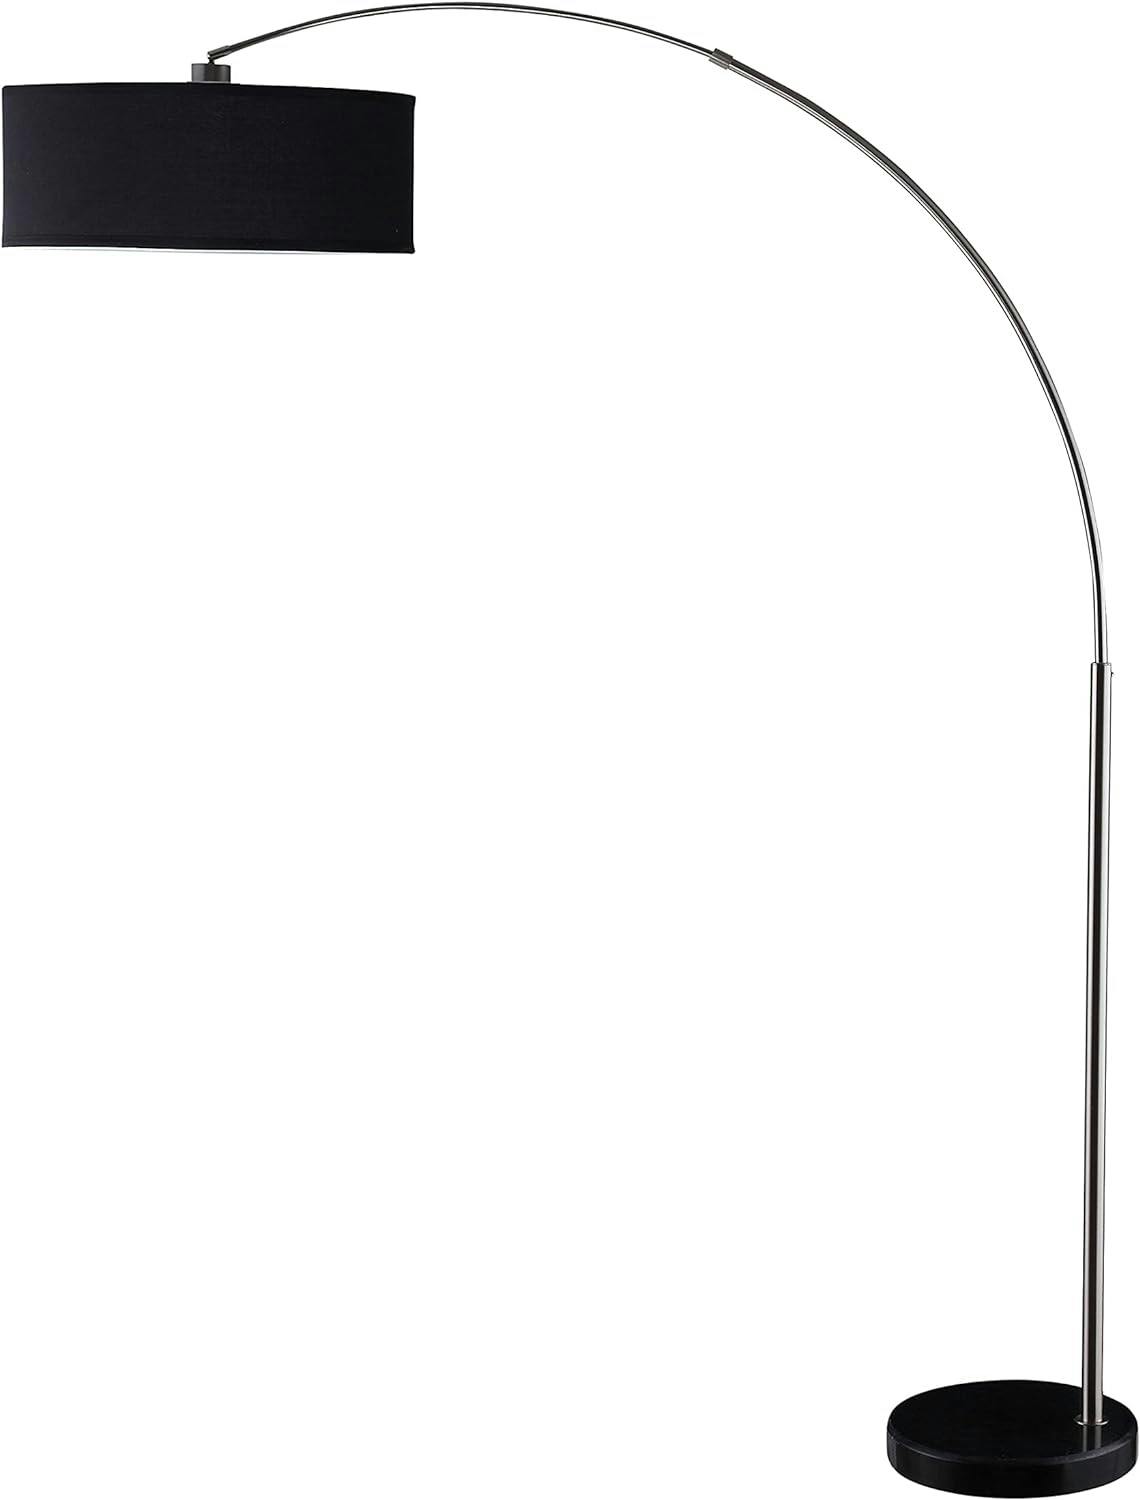 Contemporary Black Chrome Arc Floor Lamp with Circular Shade